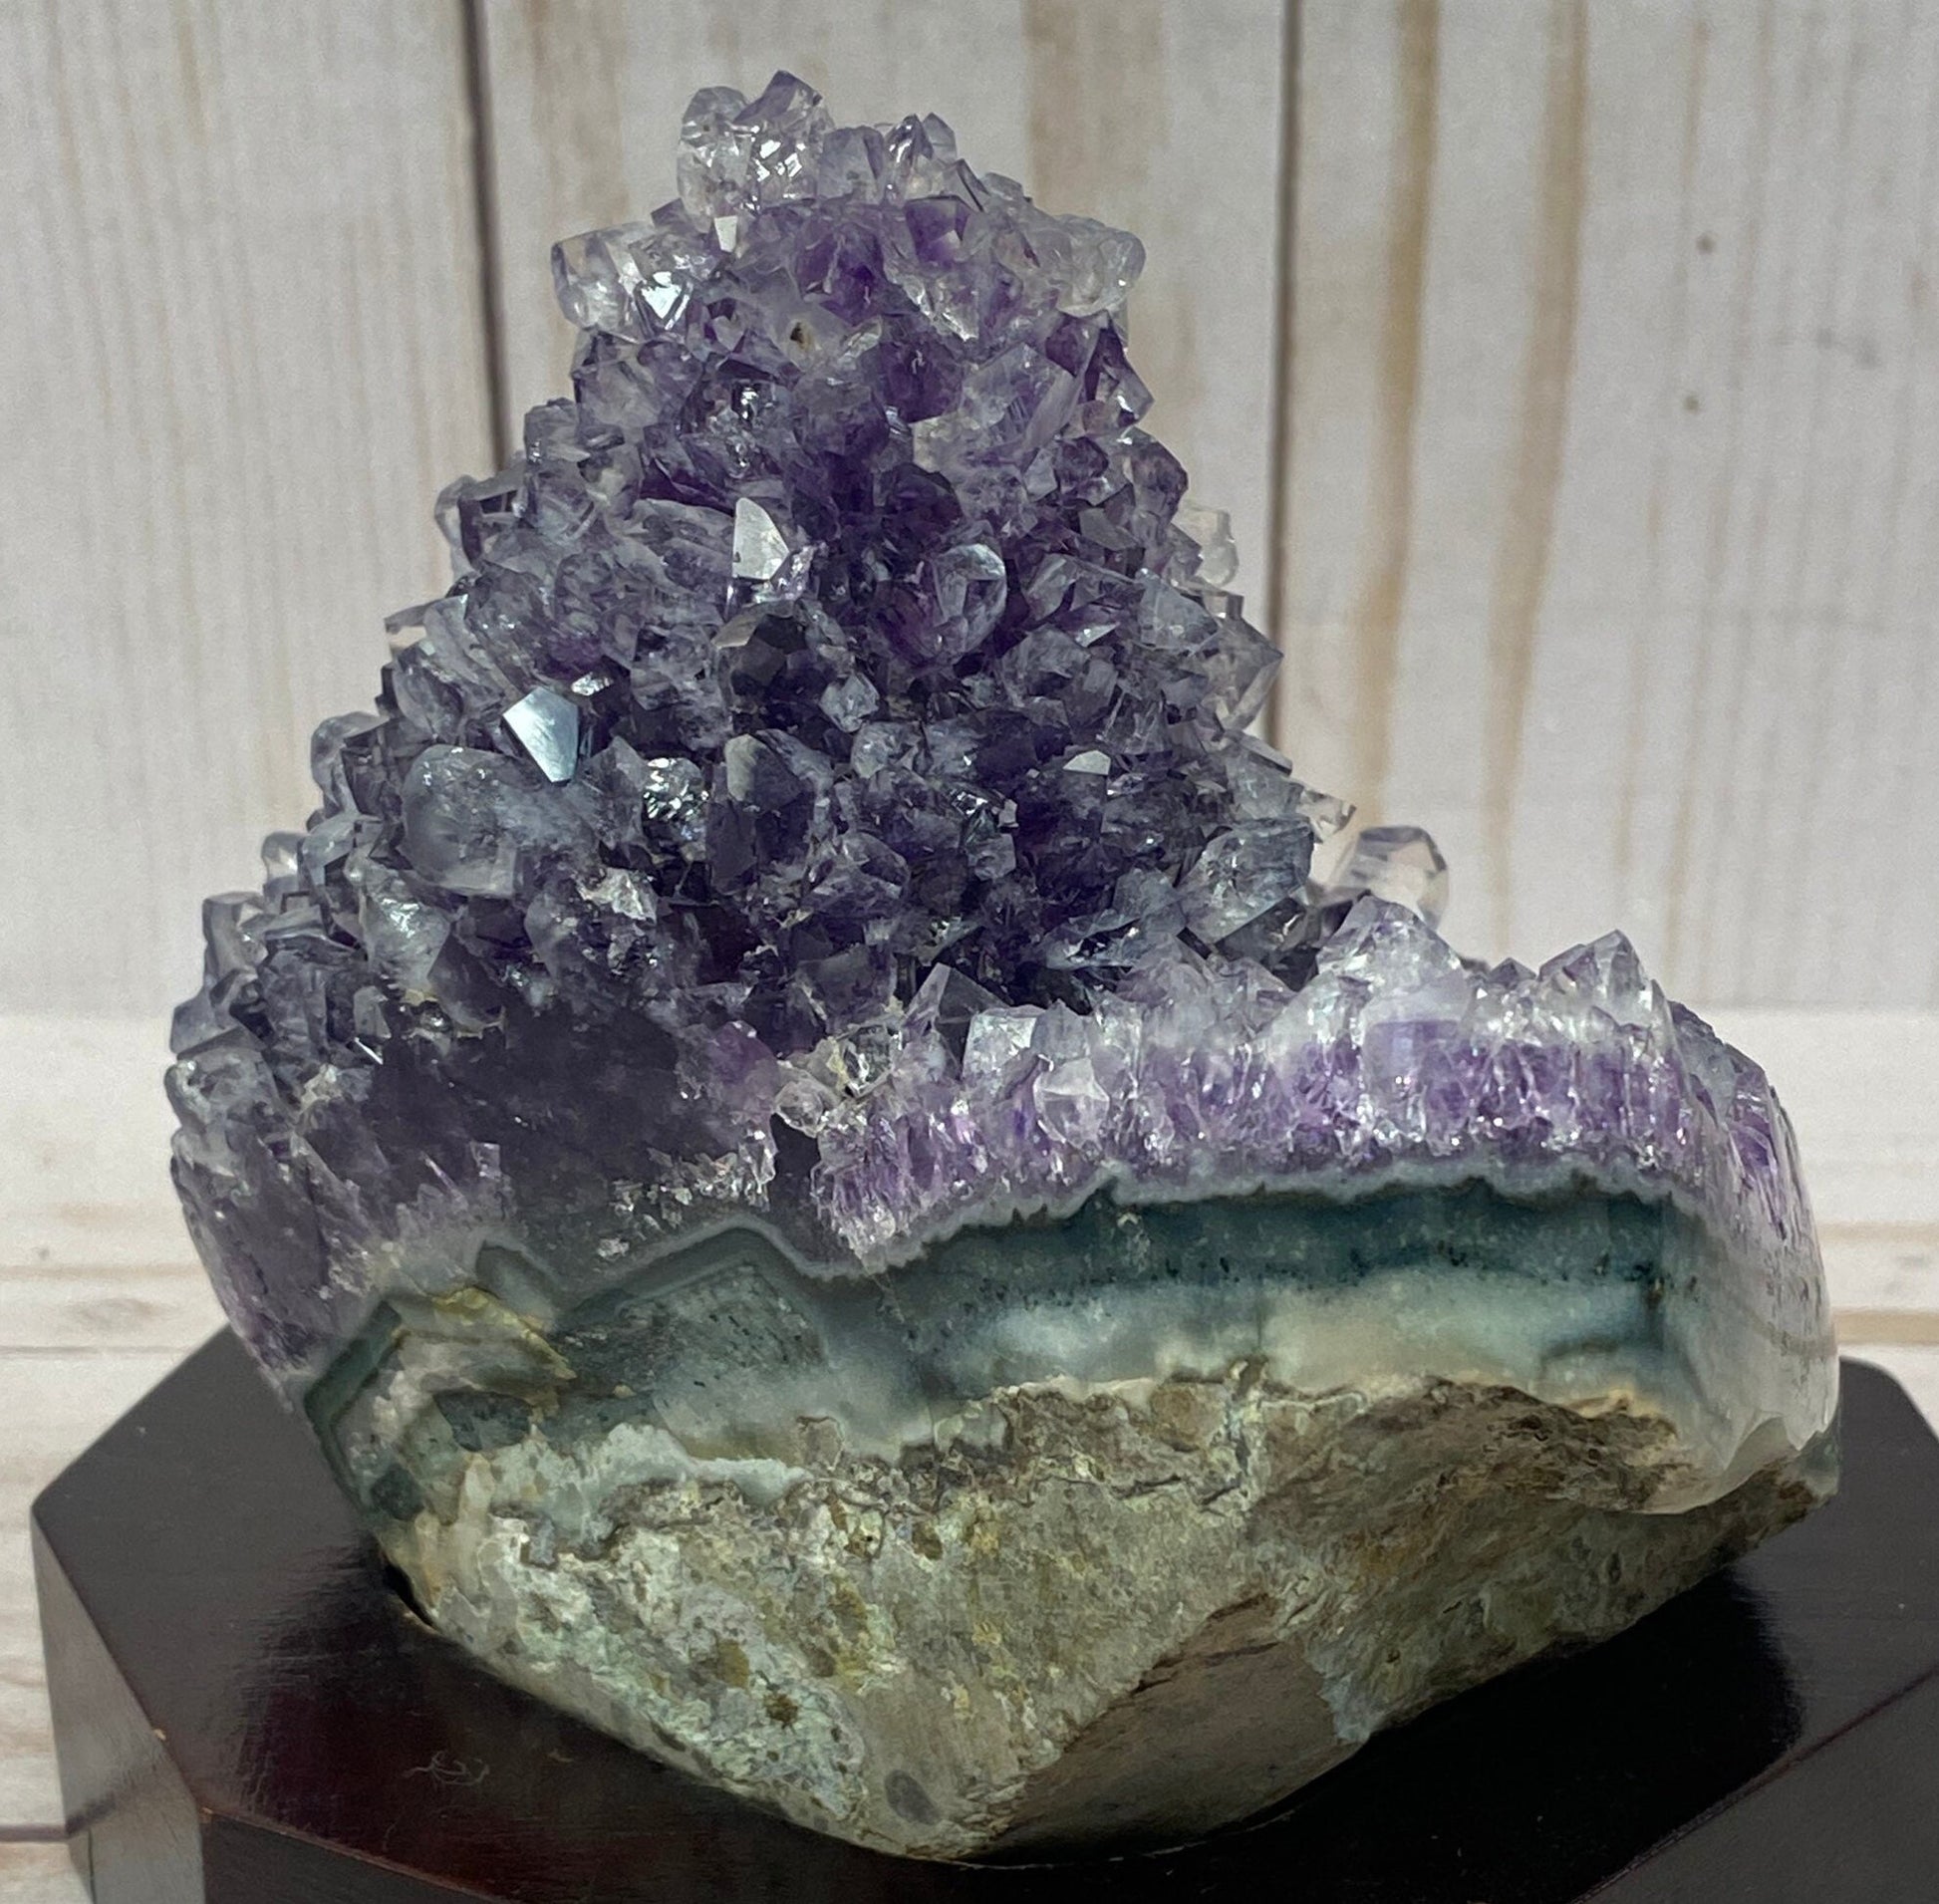 Amethyst Crystal Geode on a wood base